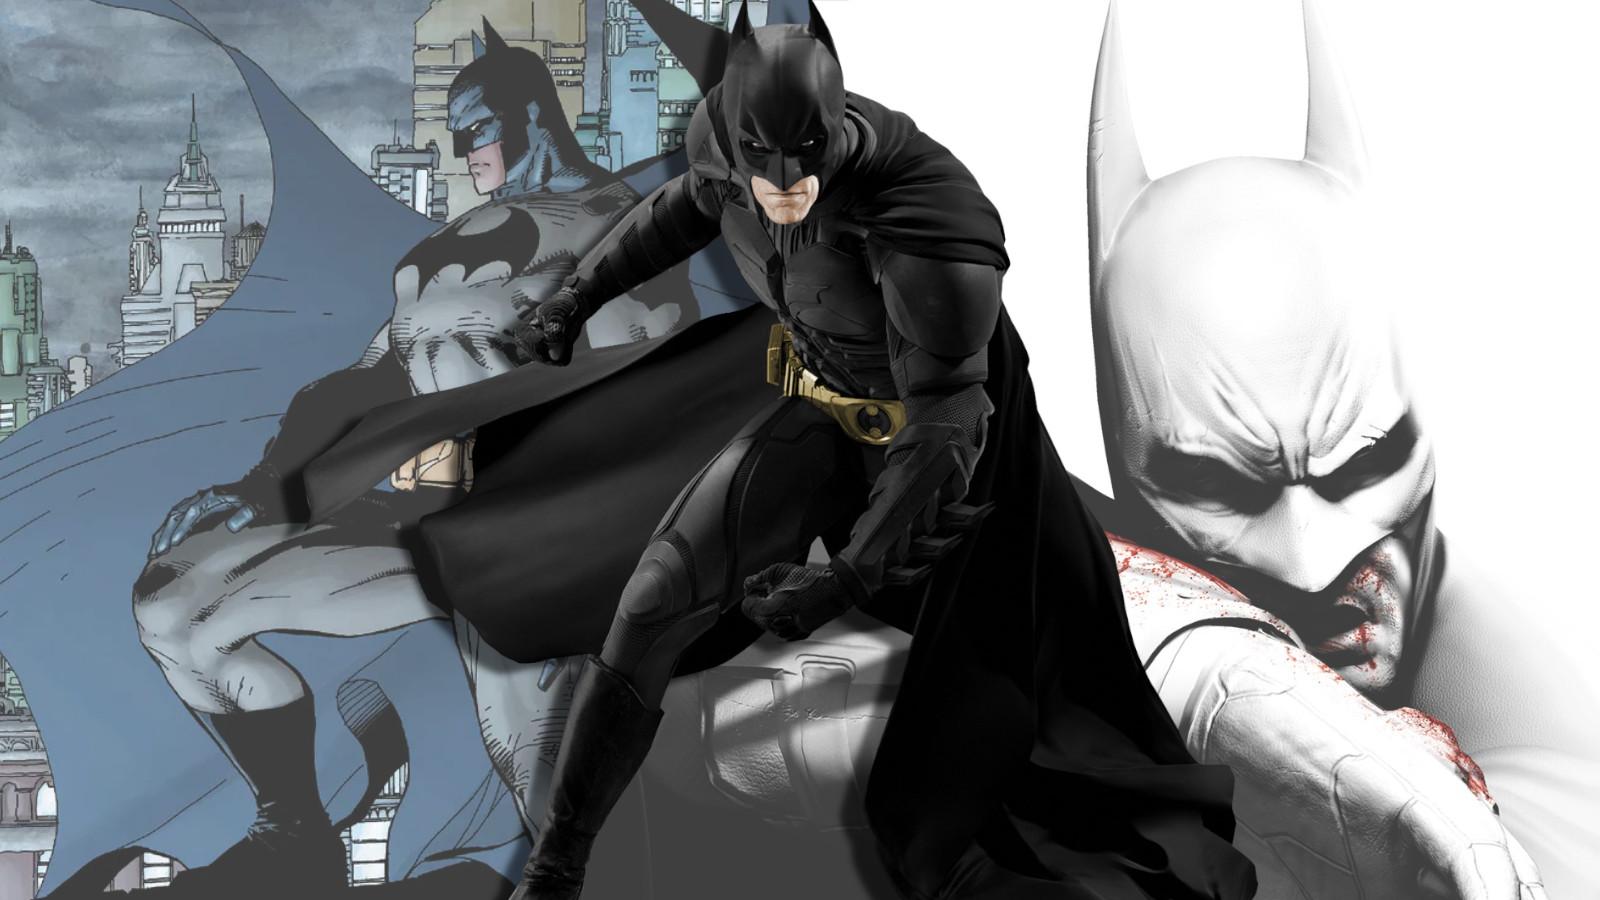 Batman as he appears in DC Comics, the Dark Knight Trilogy and Batman: Arkham City